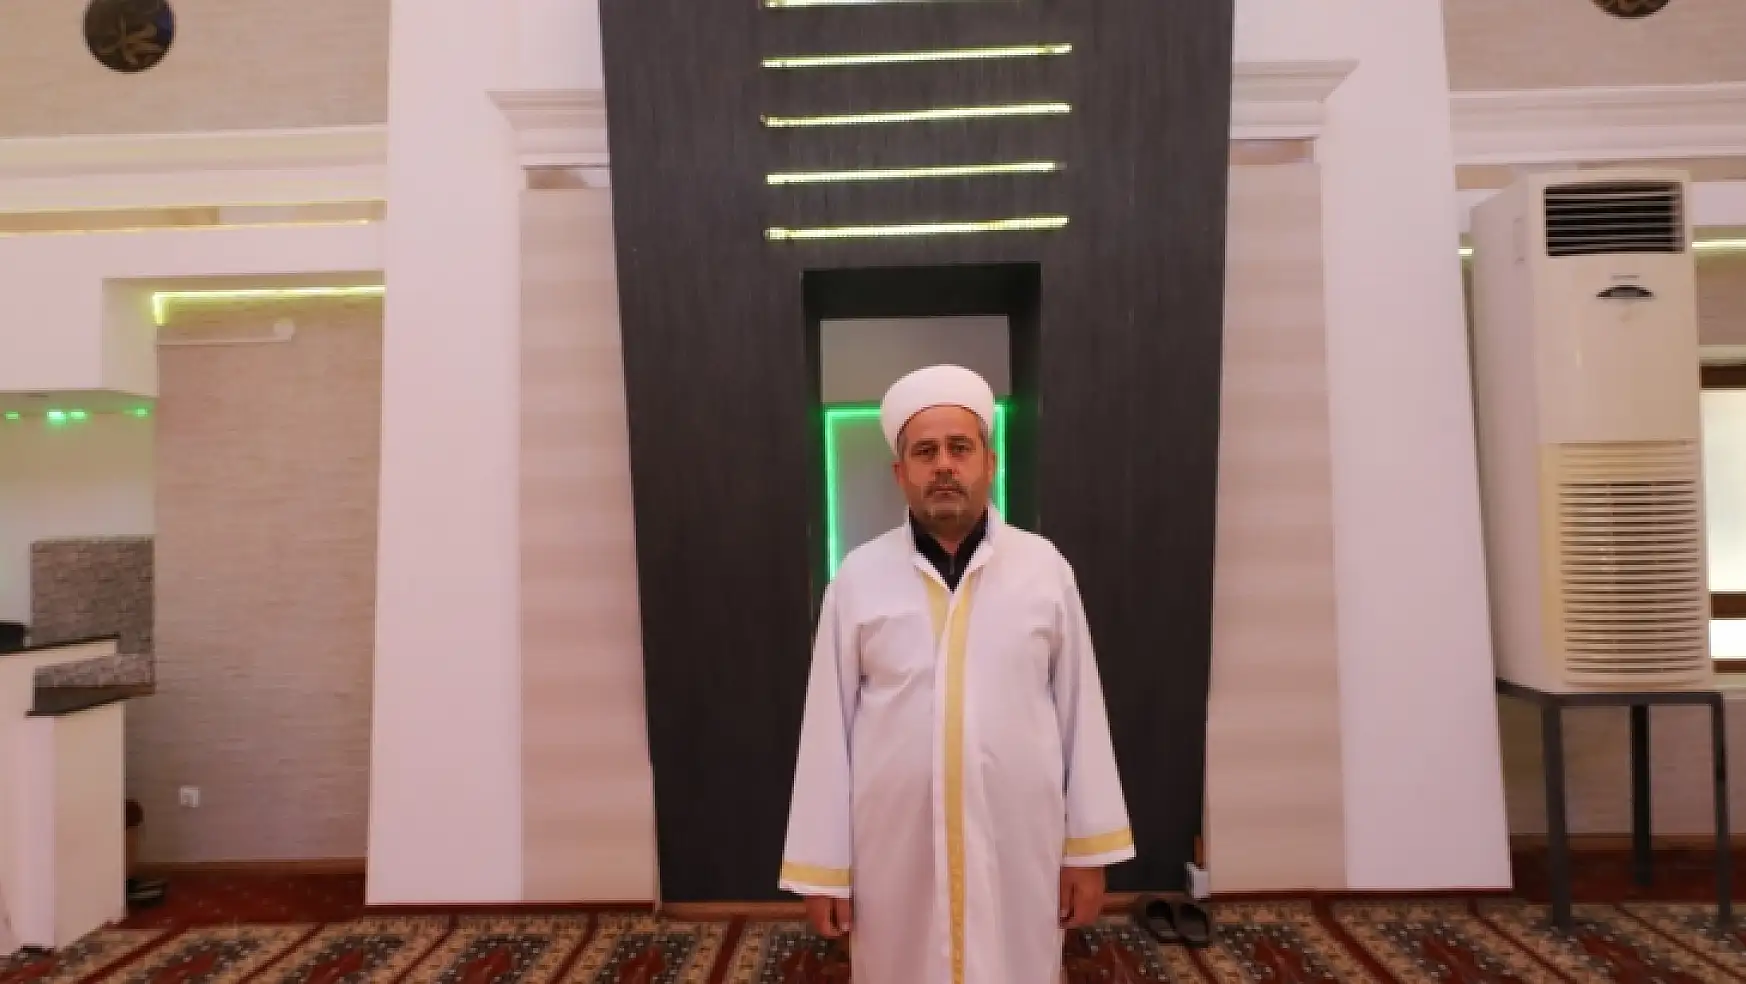 İstiklal Marşı'nın 100'üncü yılına özel hazırlanan video duygulandırdı